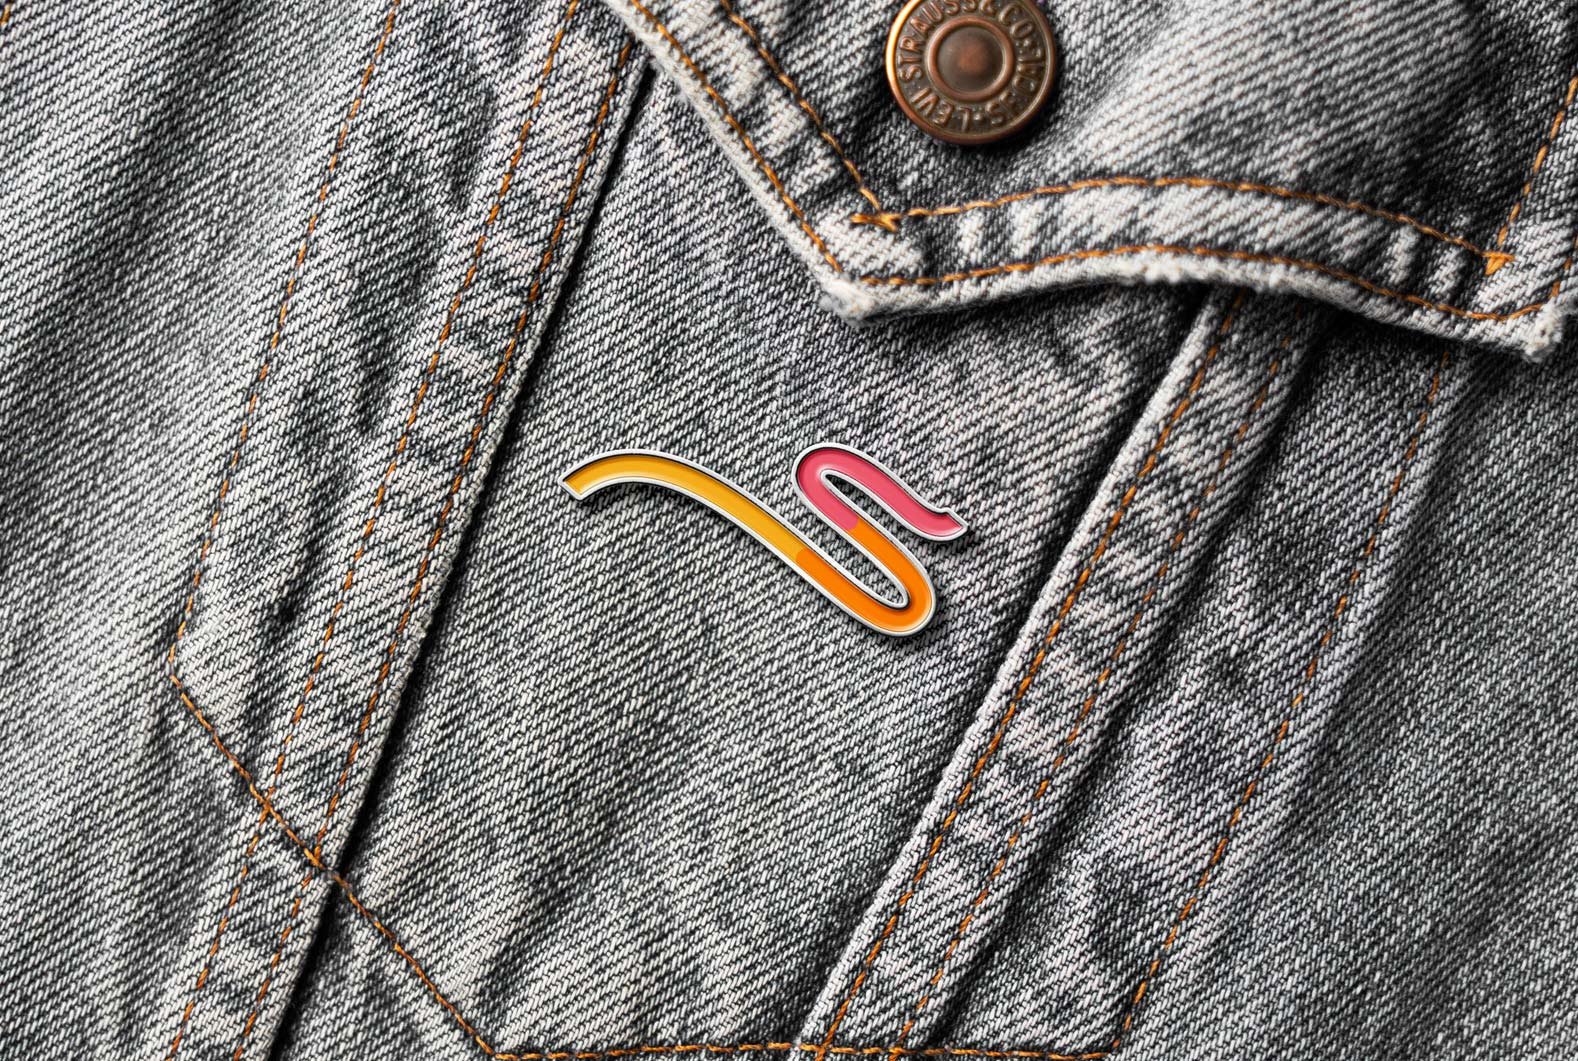 Sparkways custom branded logo pin on jacket pocket